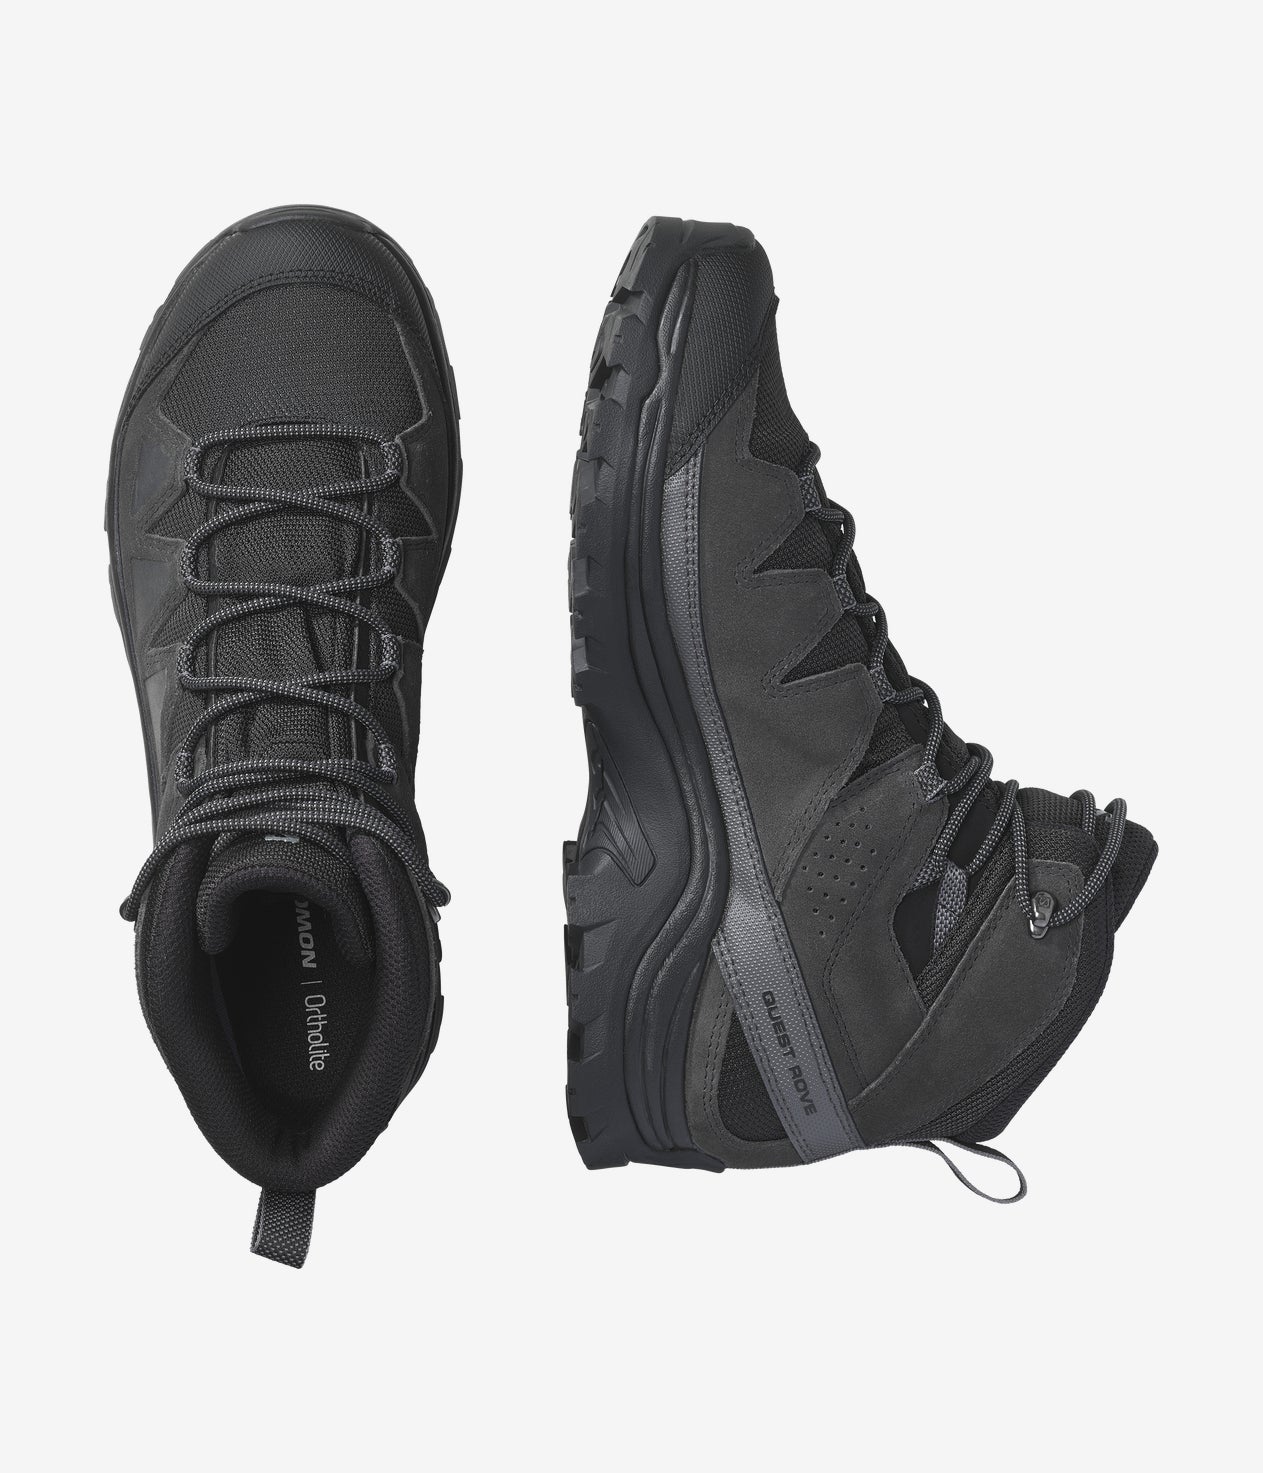 Salomon Quest Rove Gore-TEX - Zapatillas de trail running para hombre, color negro